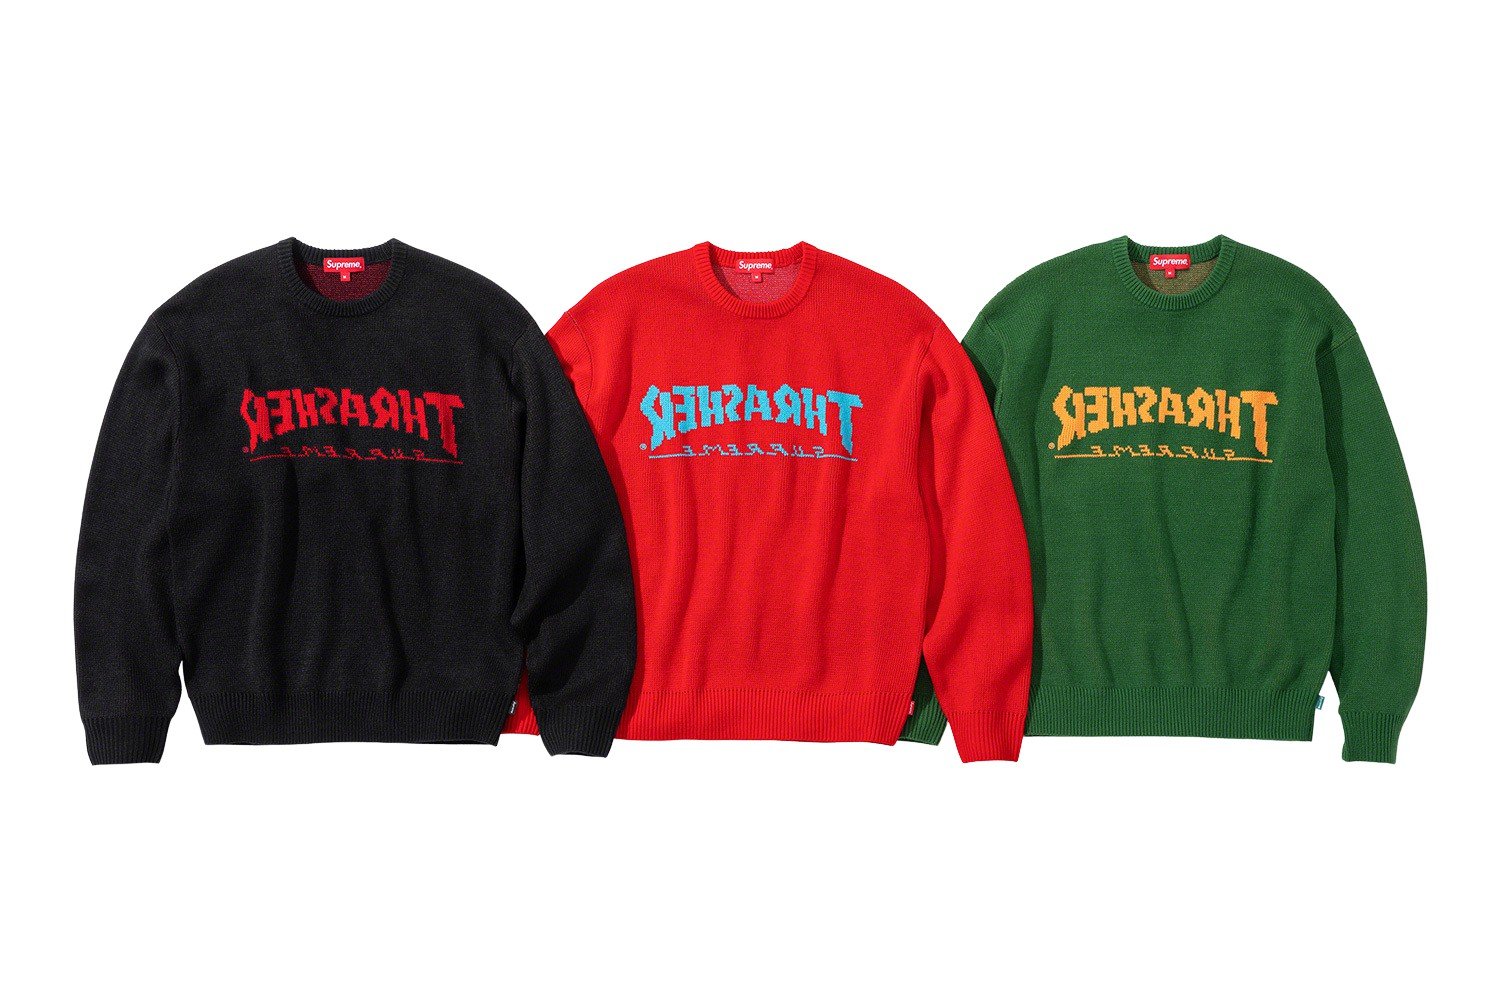 Supreme®/Thrasher® Sweater Black